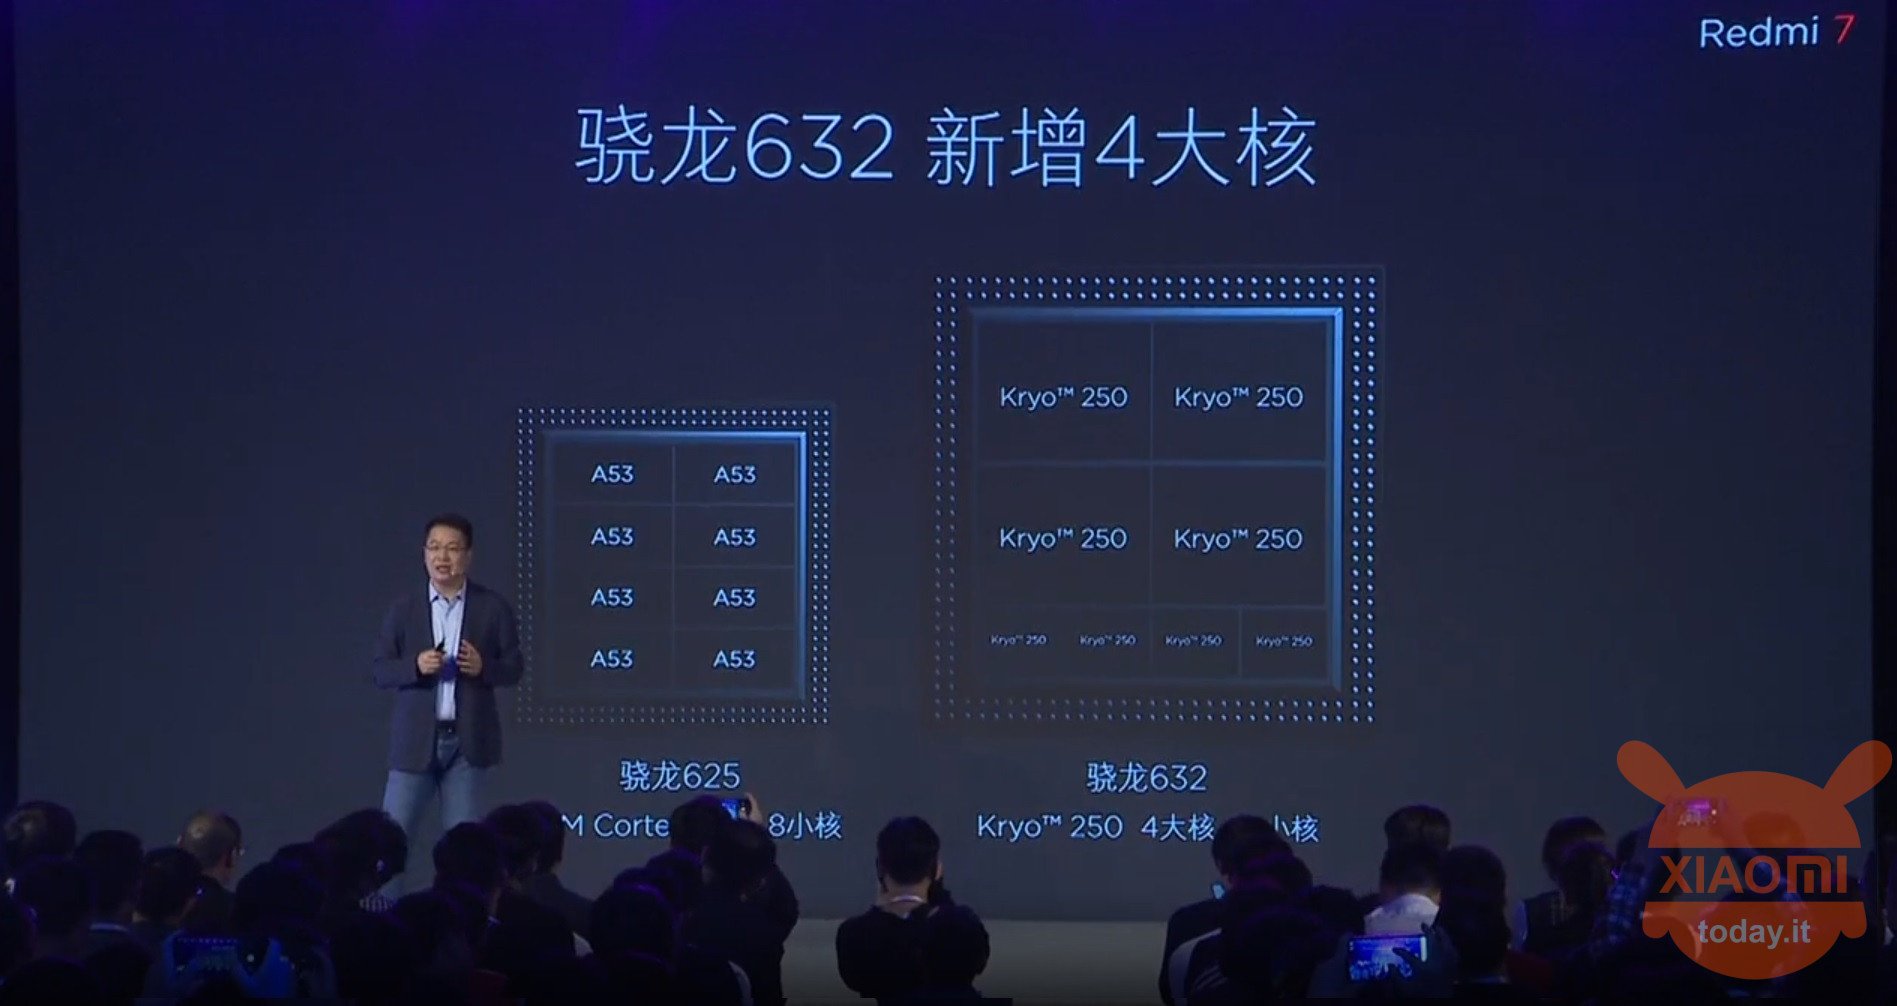 Xiaomi Redmi 7 launched